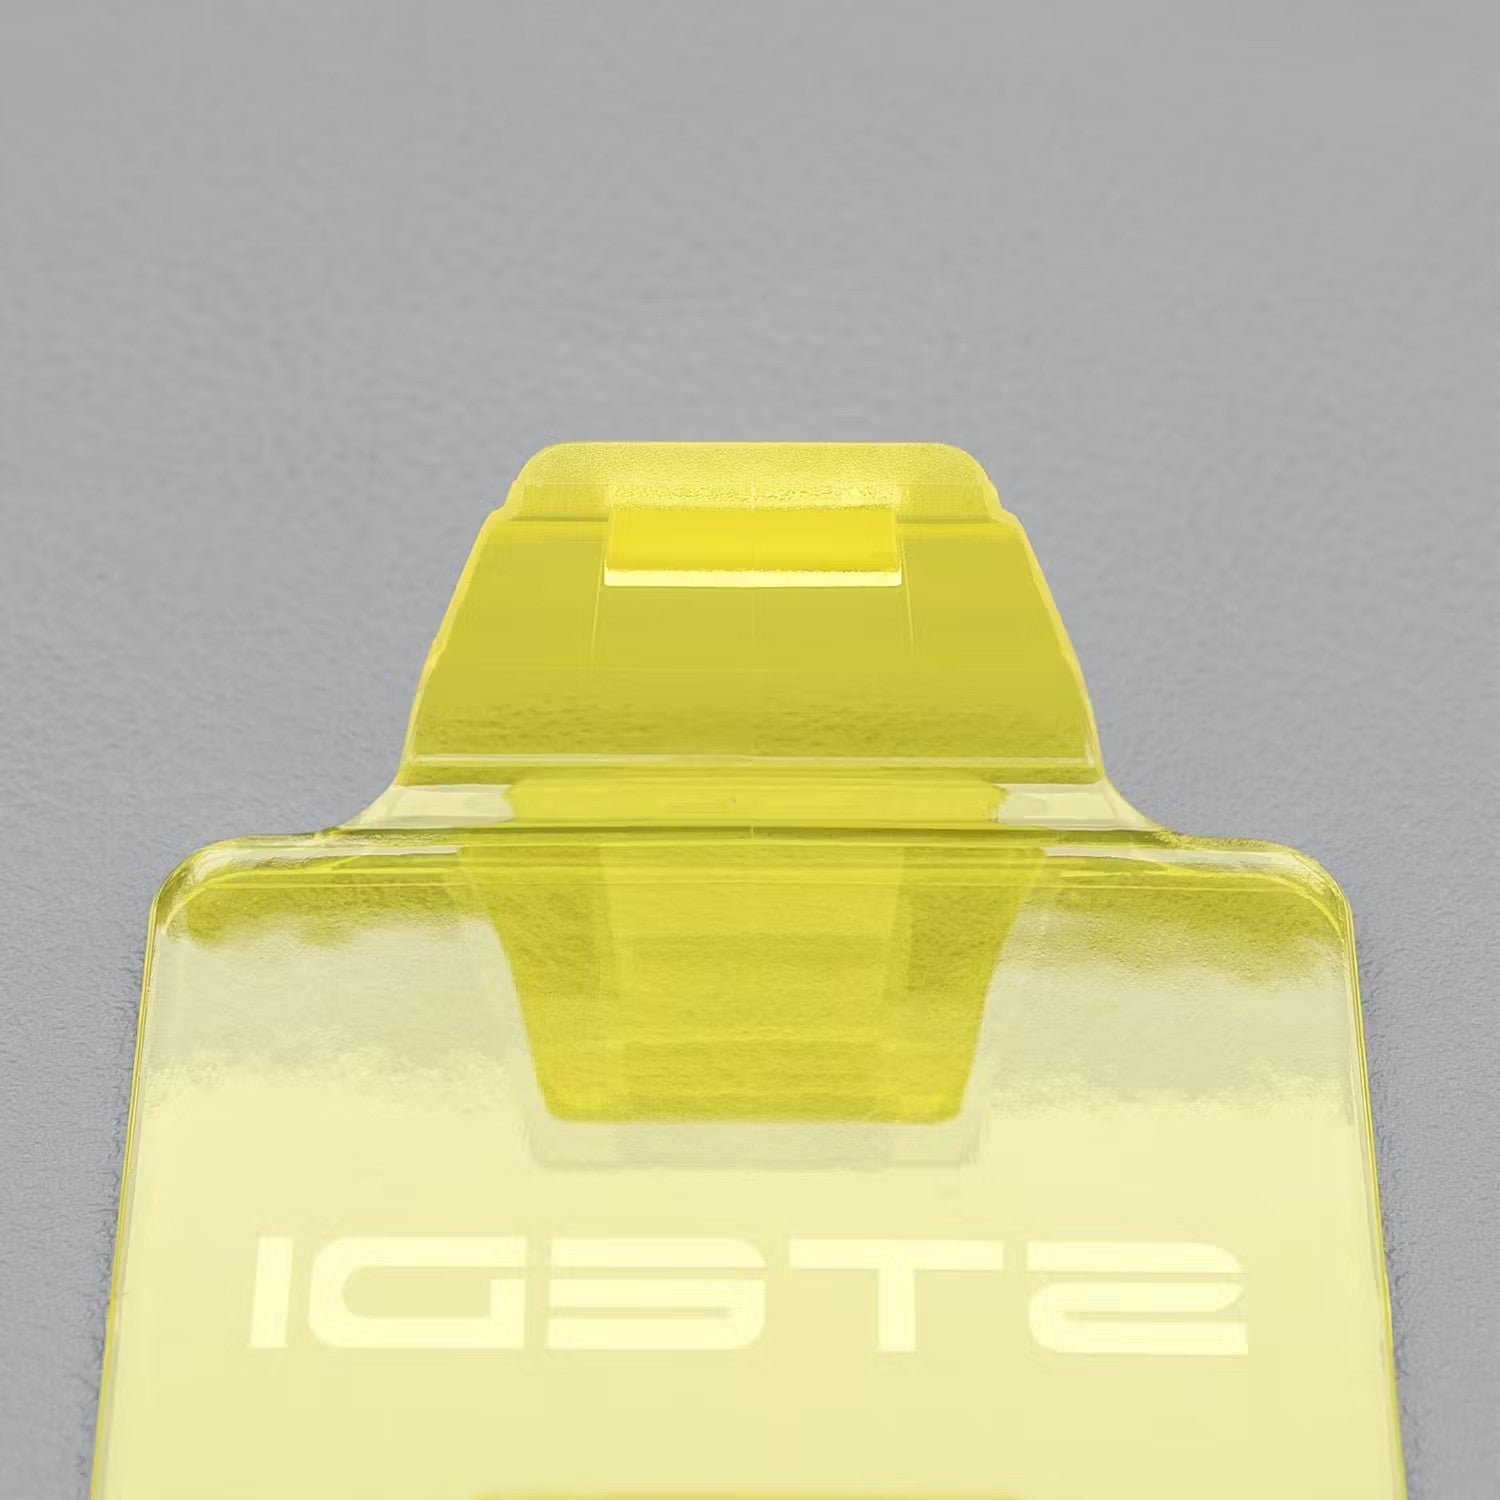 STEDI C4 Cube Abdeckung (Cover)